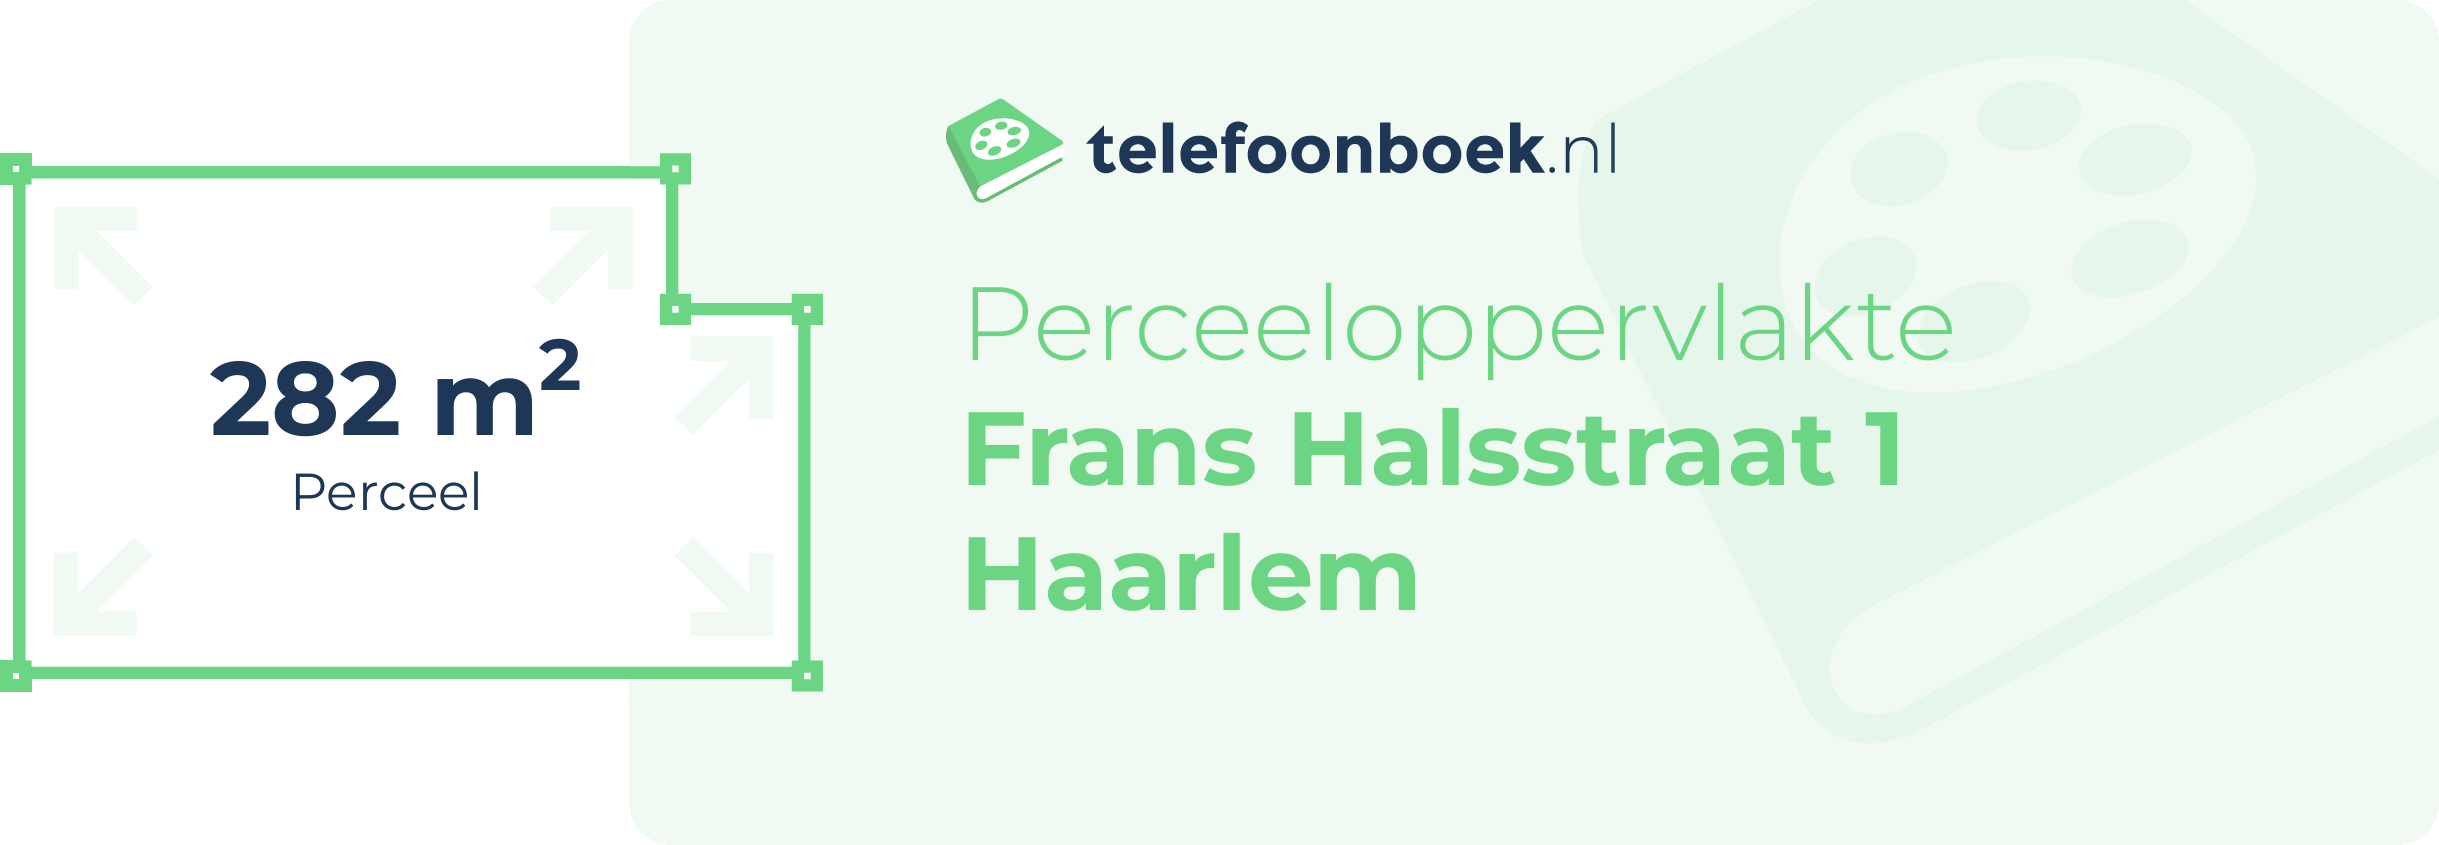 Perceeloppervlakte Frans Halsstraat 1 Haarlem